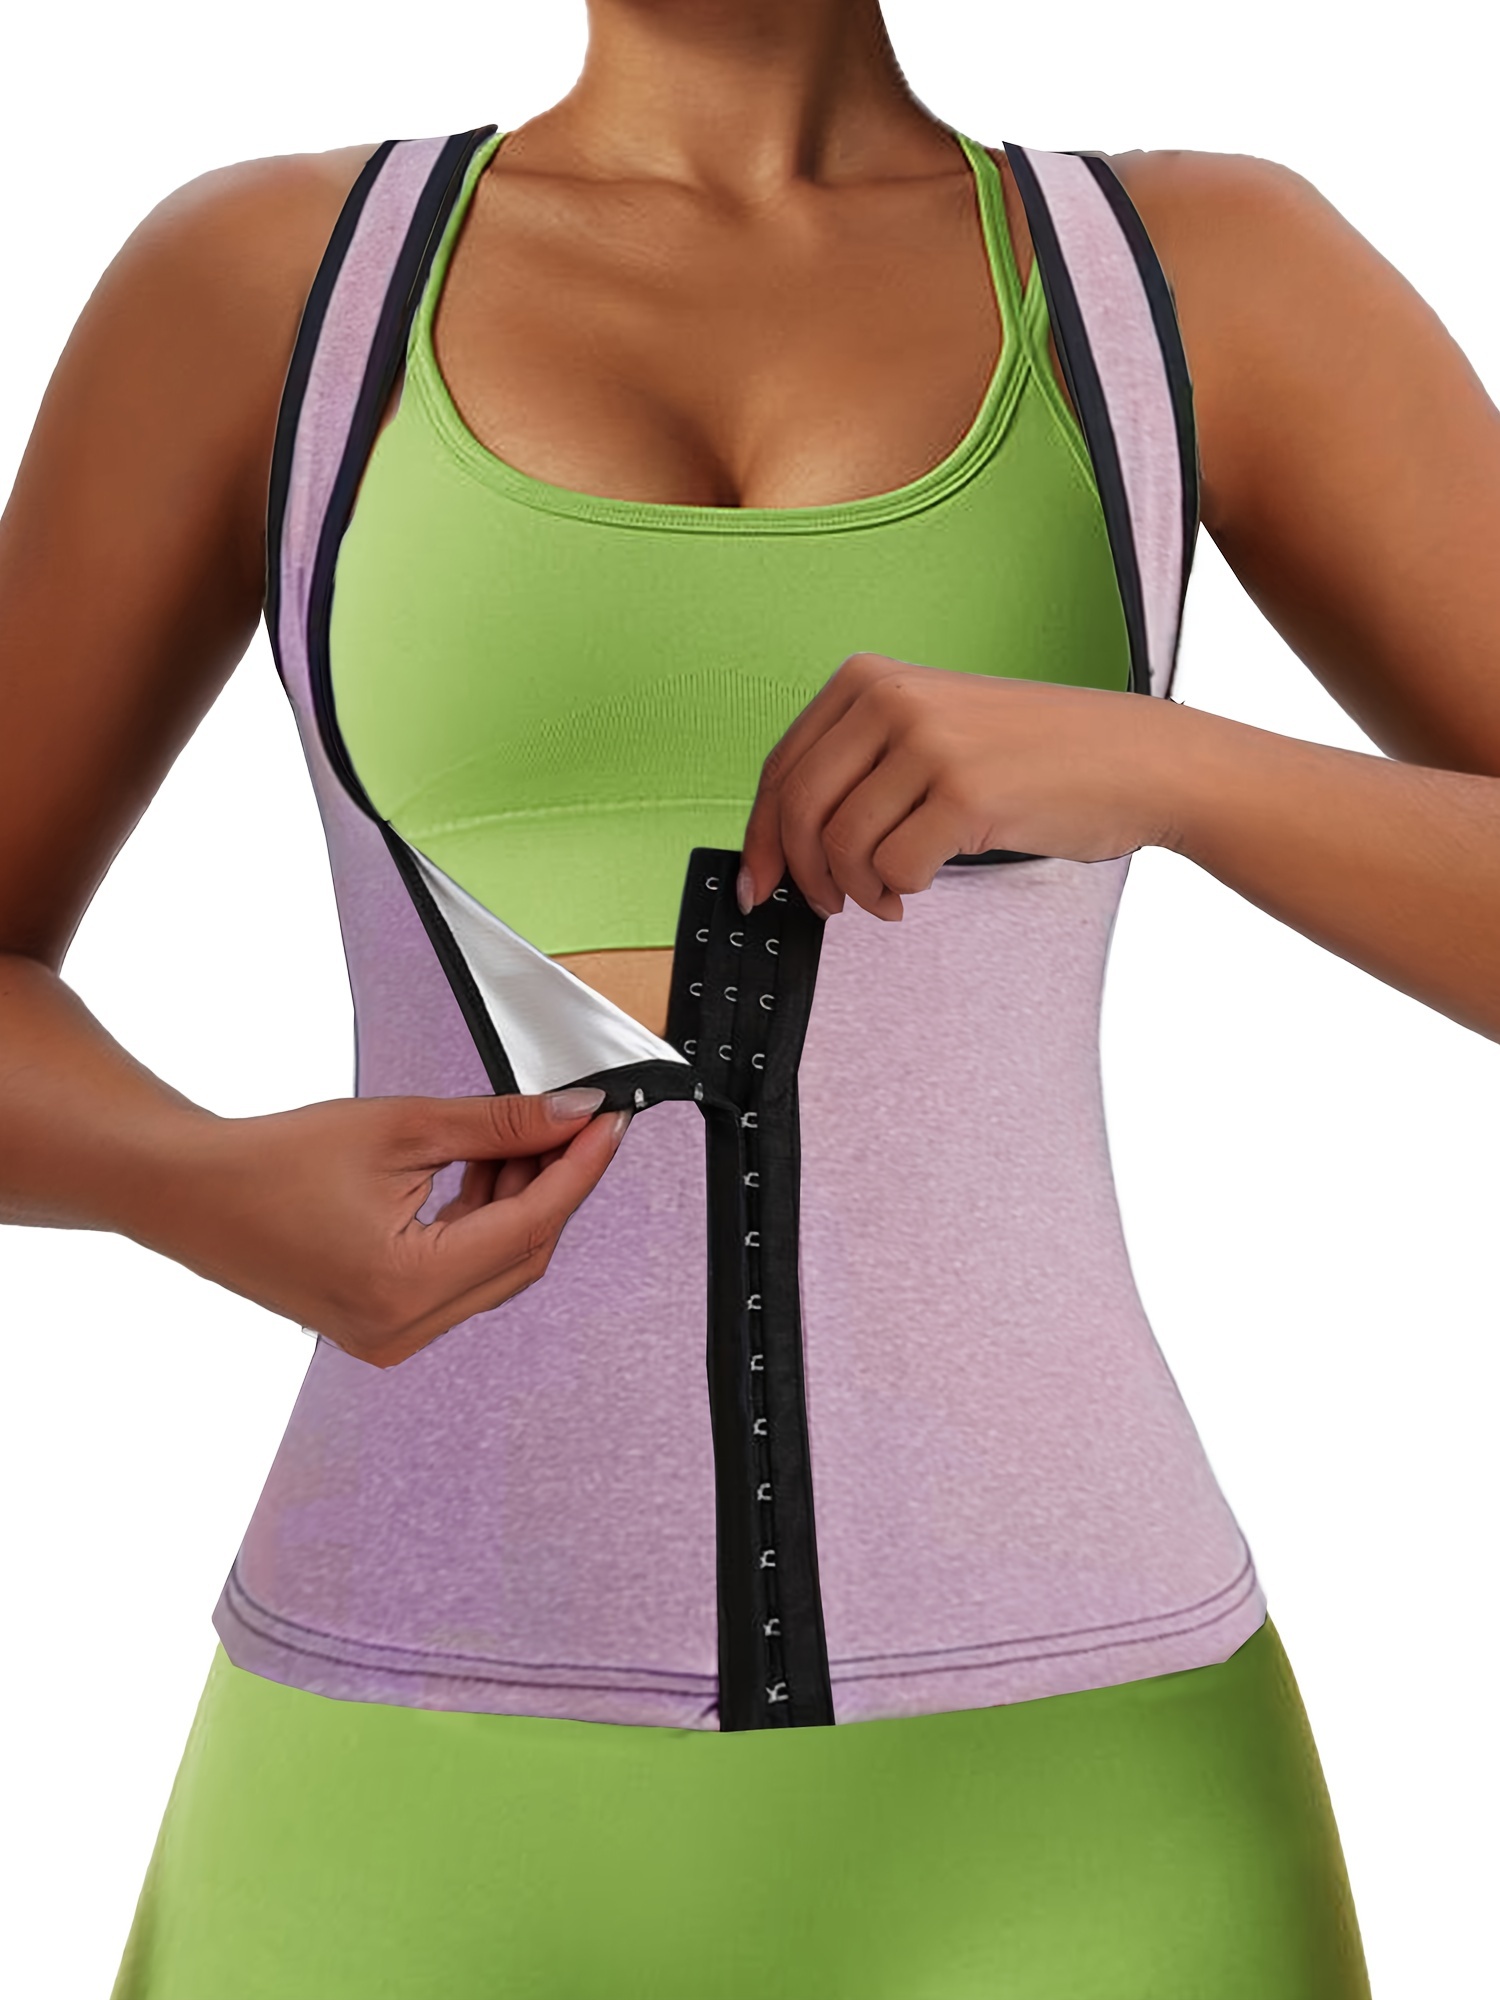 BODYSUNER Sauna Sweat Vest Workout Tank Top Waist Trainer for Women  Compression Workout Enhancing Vest Blue Small/Medium